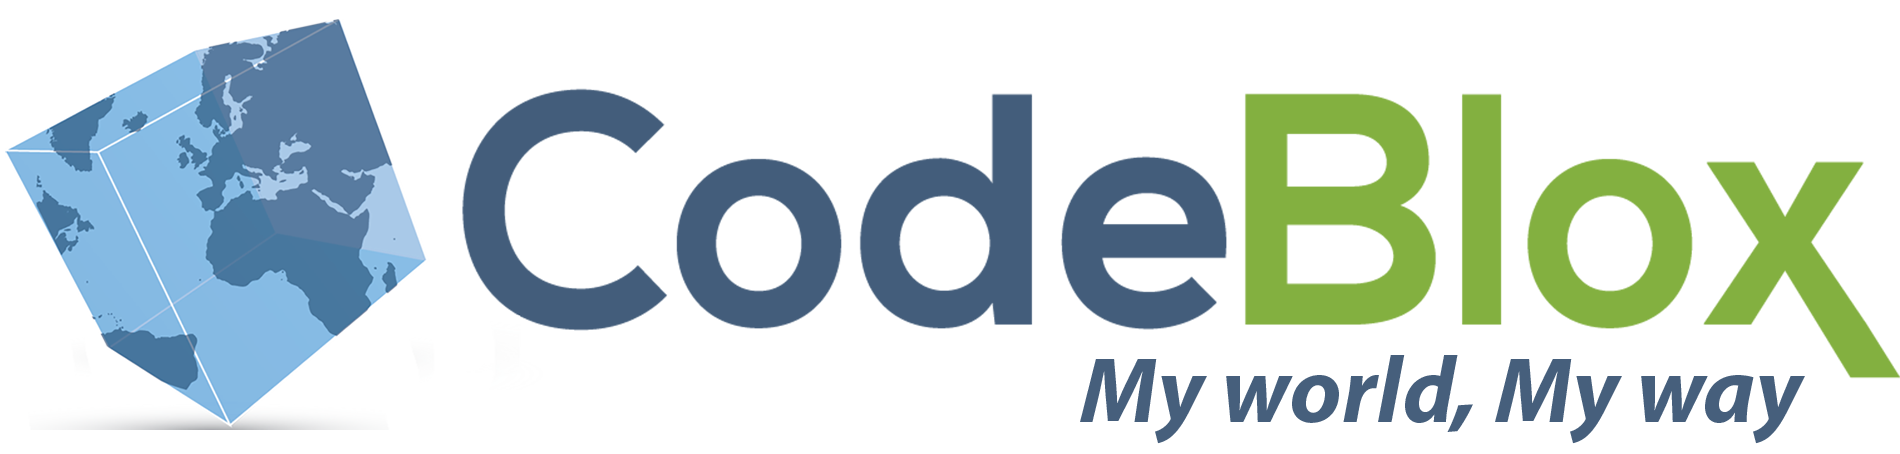 Codeblox logo showing square globe and My World My Way slogan.